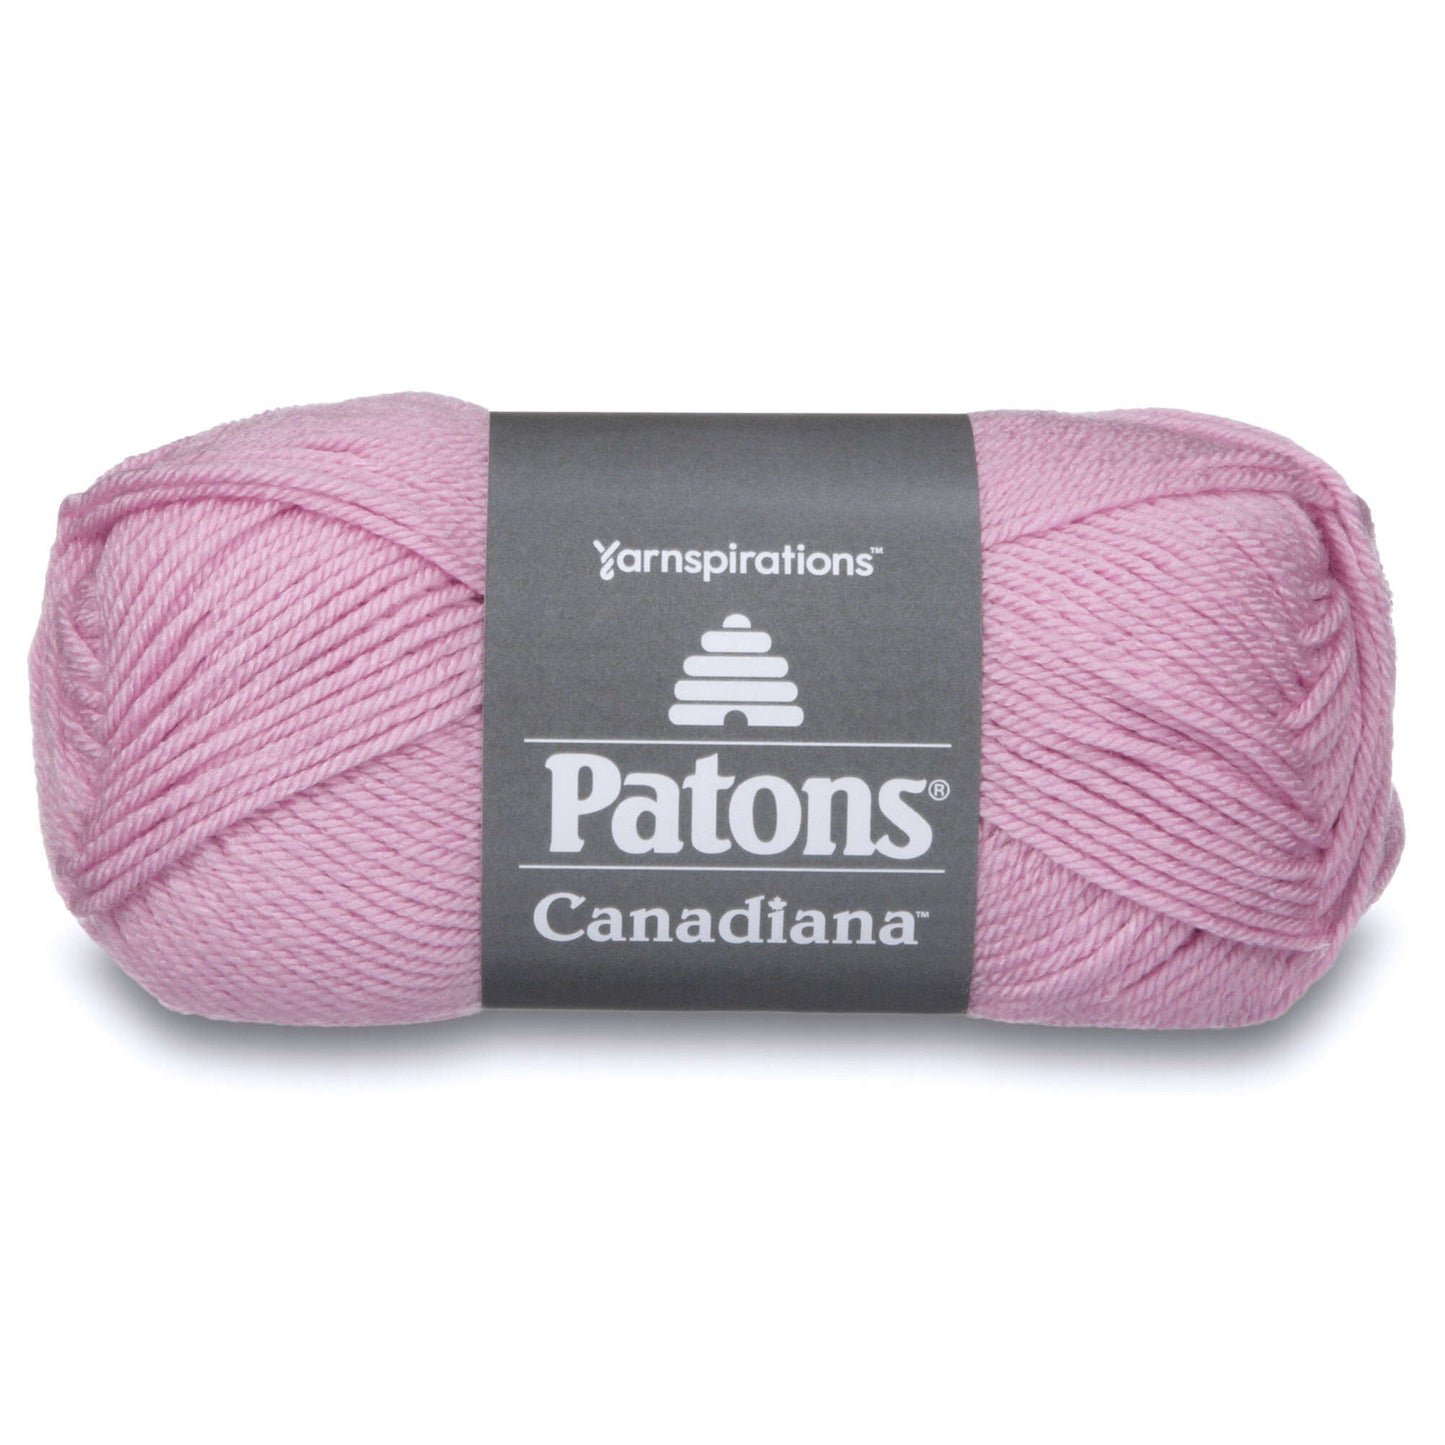 Patons® Canadiana - Cherished Pink